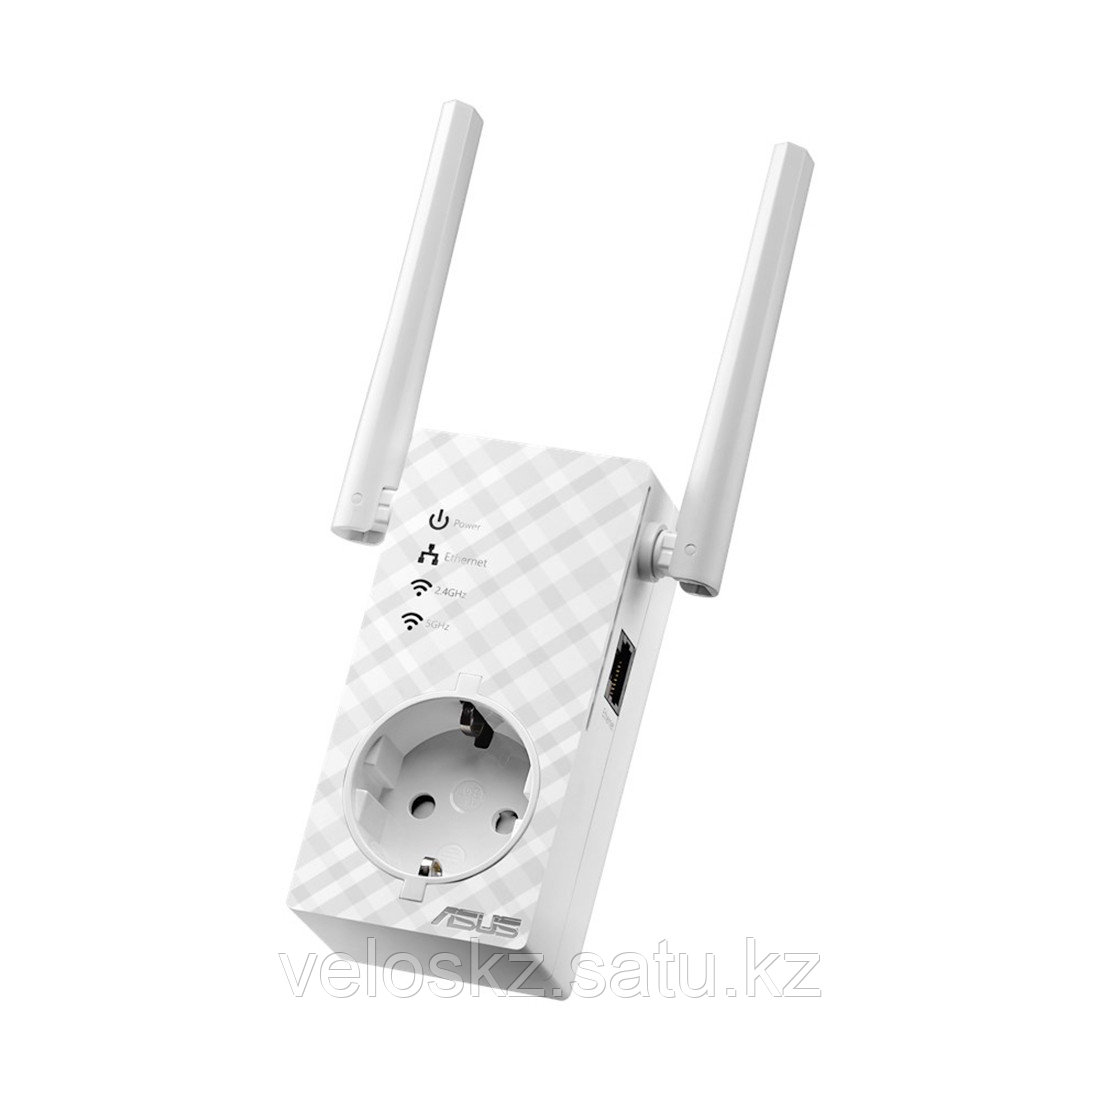 ASUS Точка доступа ASUS RP-AC53/Усилитель Wi-Fi сигнала